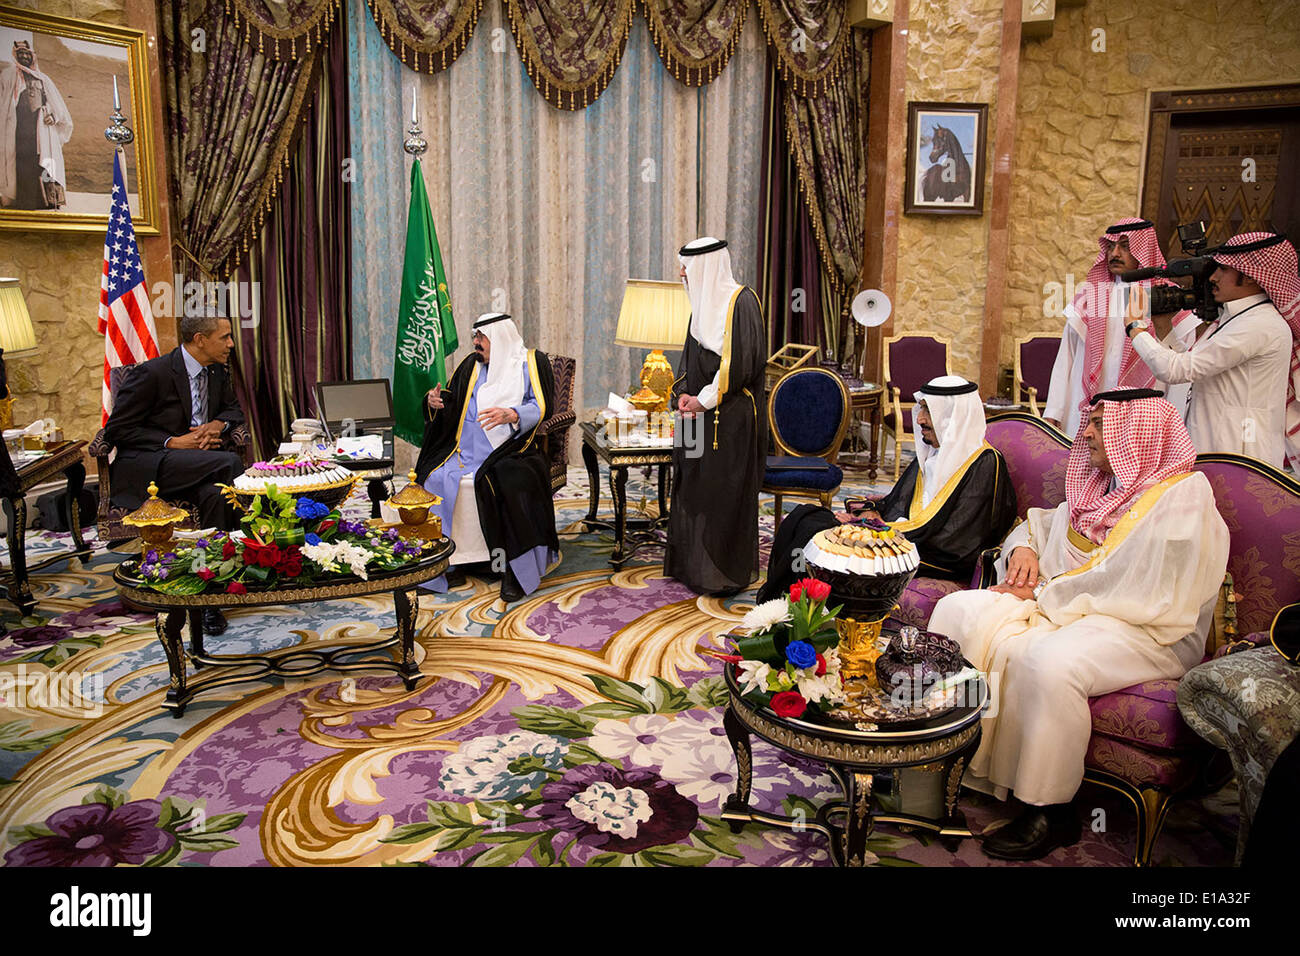 US President Barack Obama meets with King Abdullah bin Abdulaziz Al Saud of the Kingdom of Saudi Arabia at Rawdat Khuraim March 28, 2014 in Saudi Arabia. Stock Photo